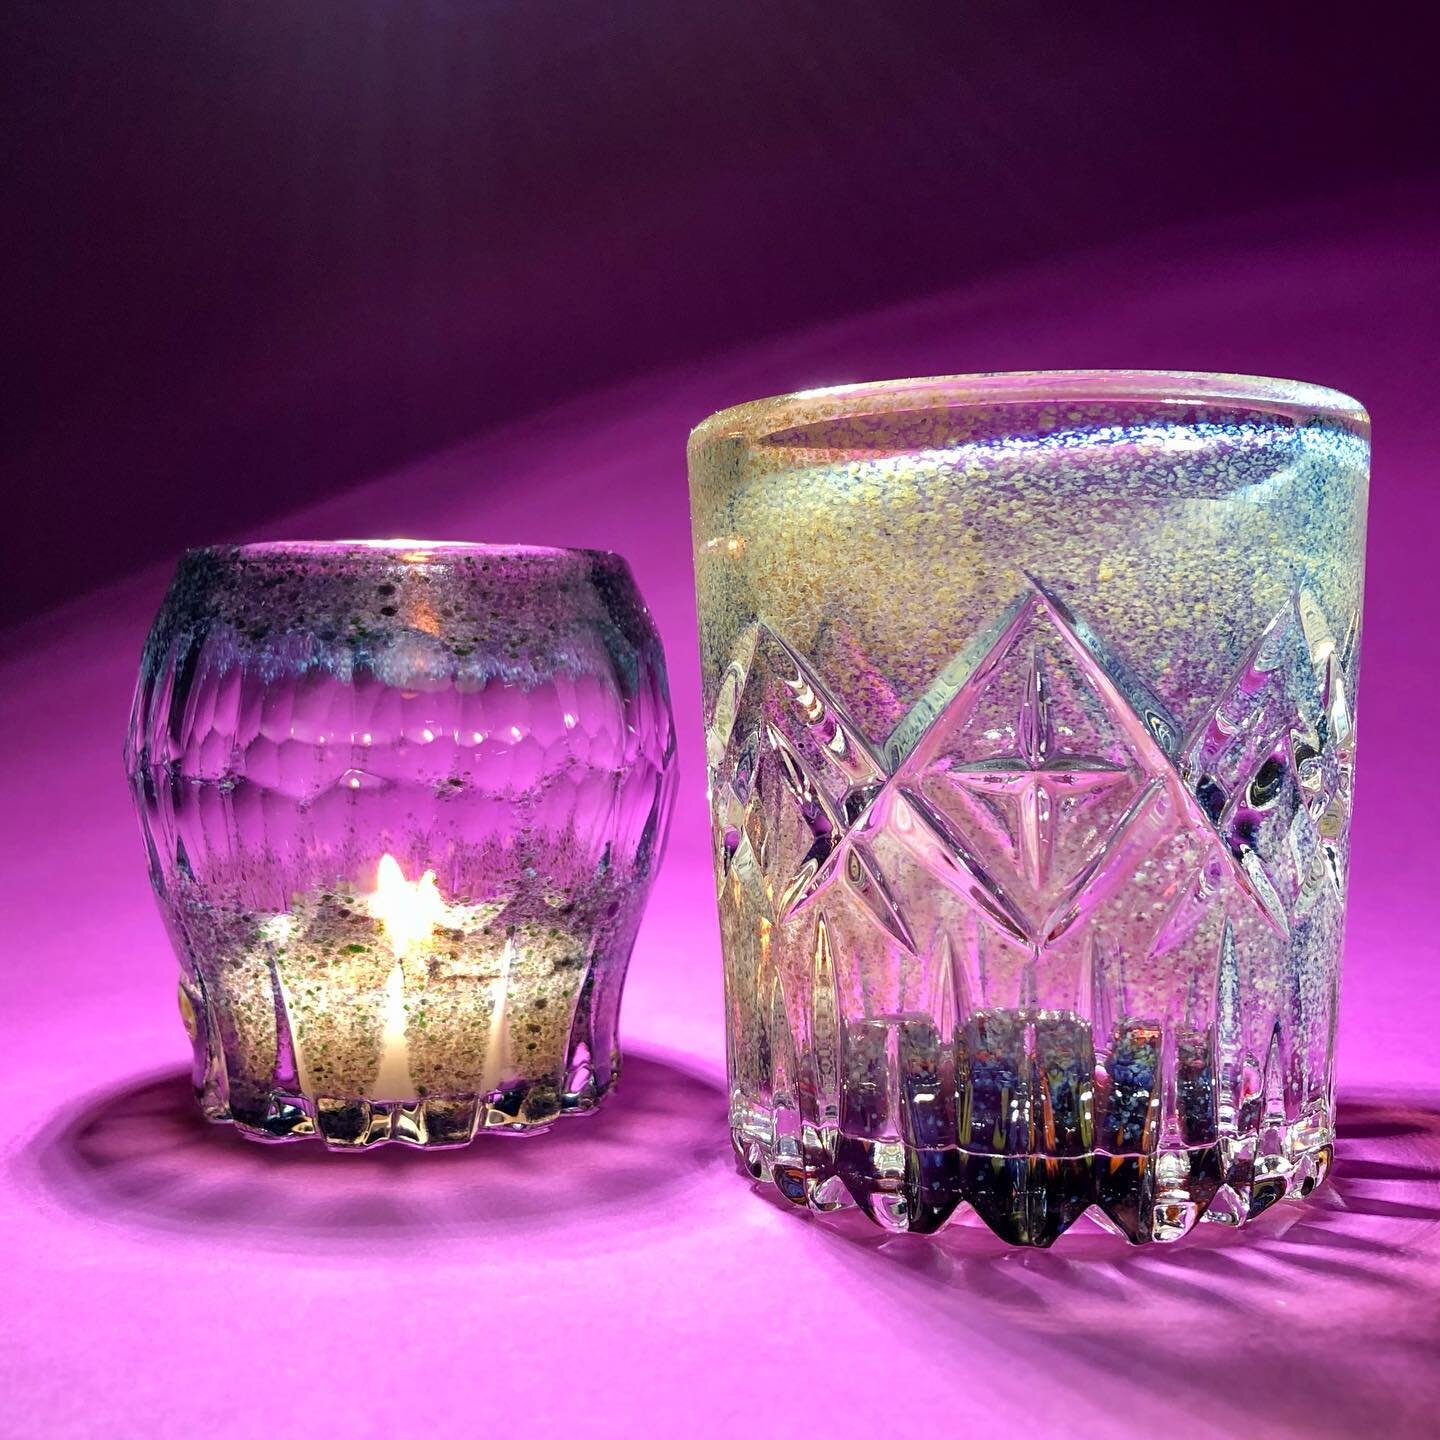 -
twilit eventide
the balance buffalo soothes
watching many spirits

6.5oz...

#glassworks  #functionalglassart #handmade #drinkingvessels #glassporn #carvedglass  #handmade  #cutglass #haiku #votive #whiskey #scotch #spirits #keepitglassy #cheers #a